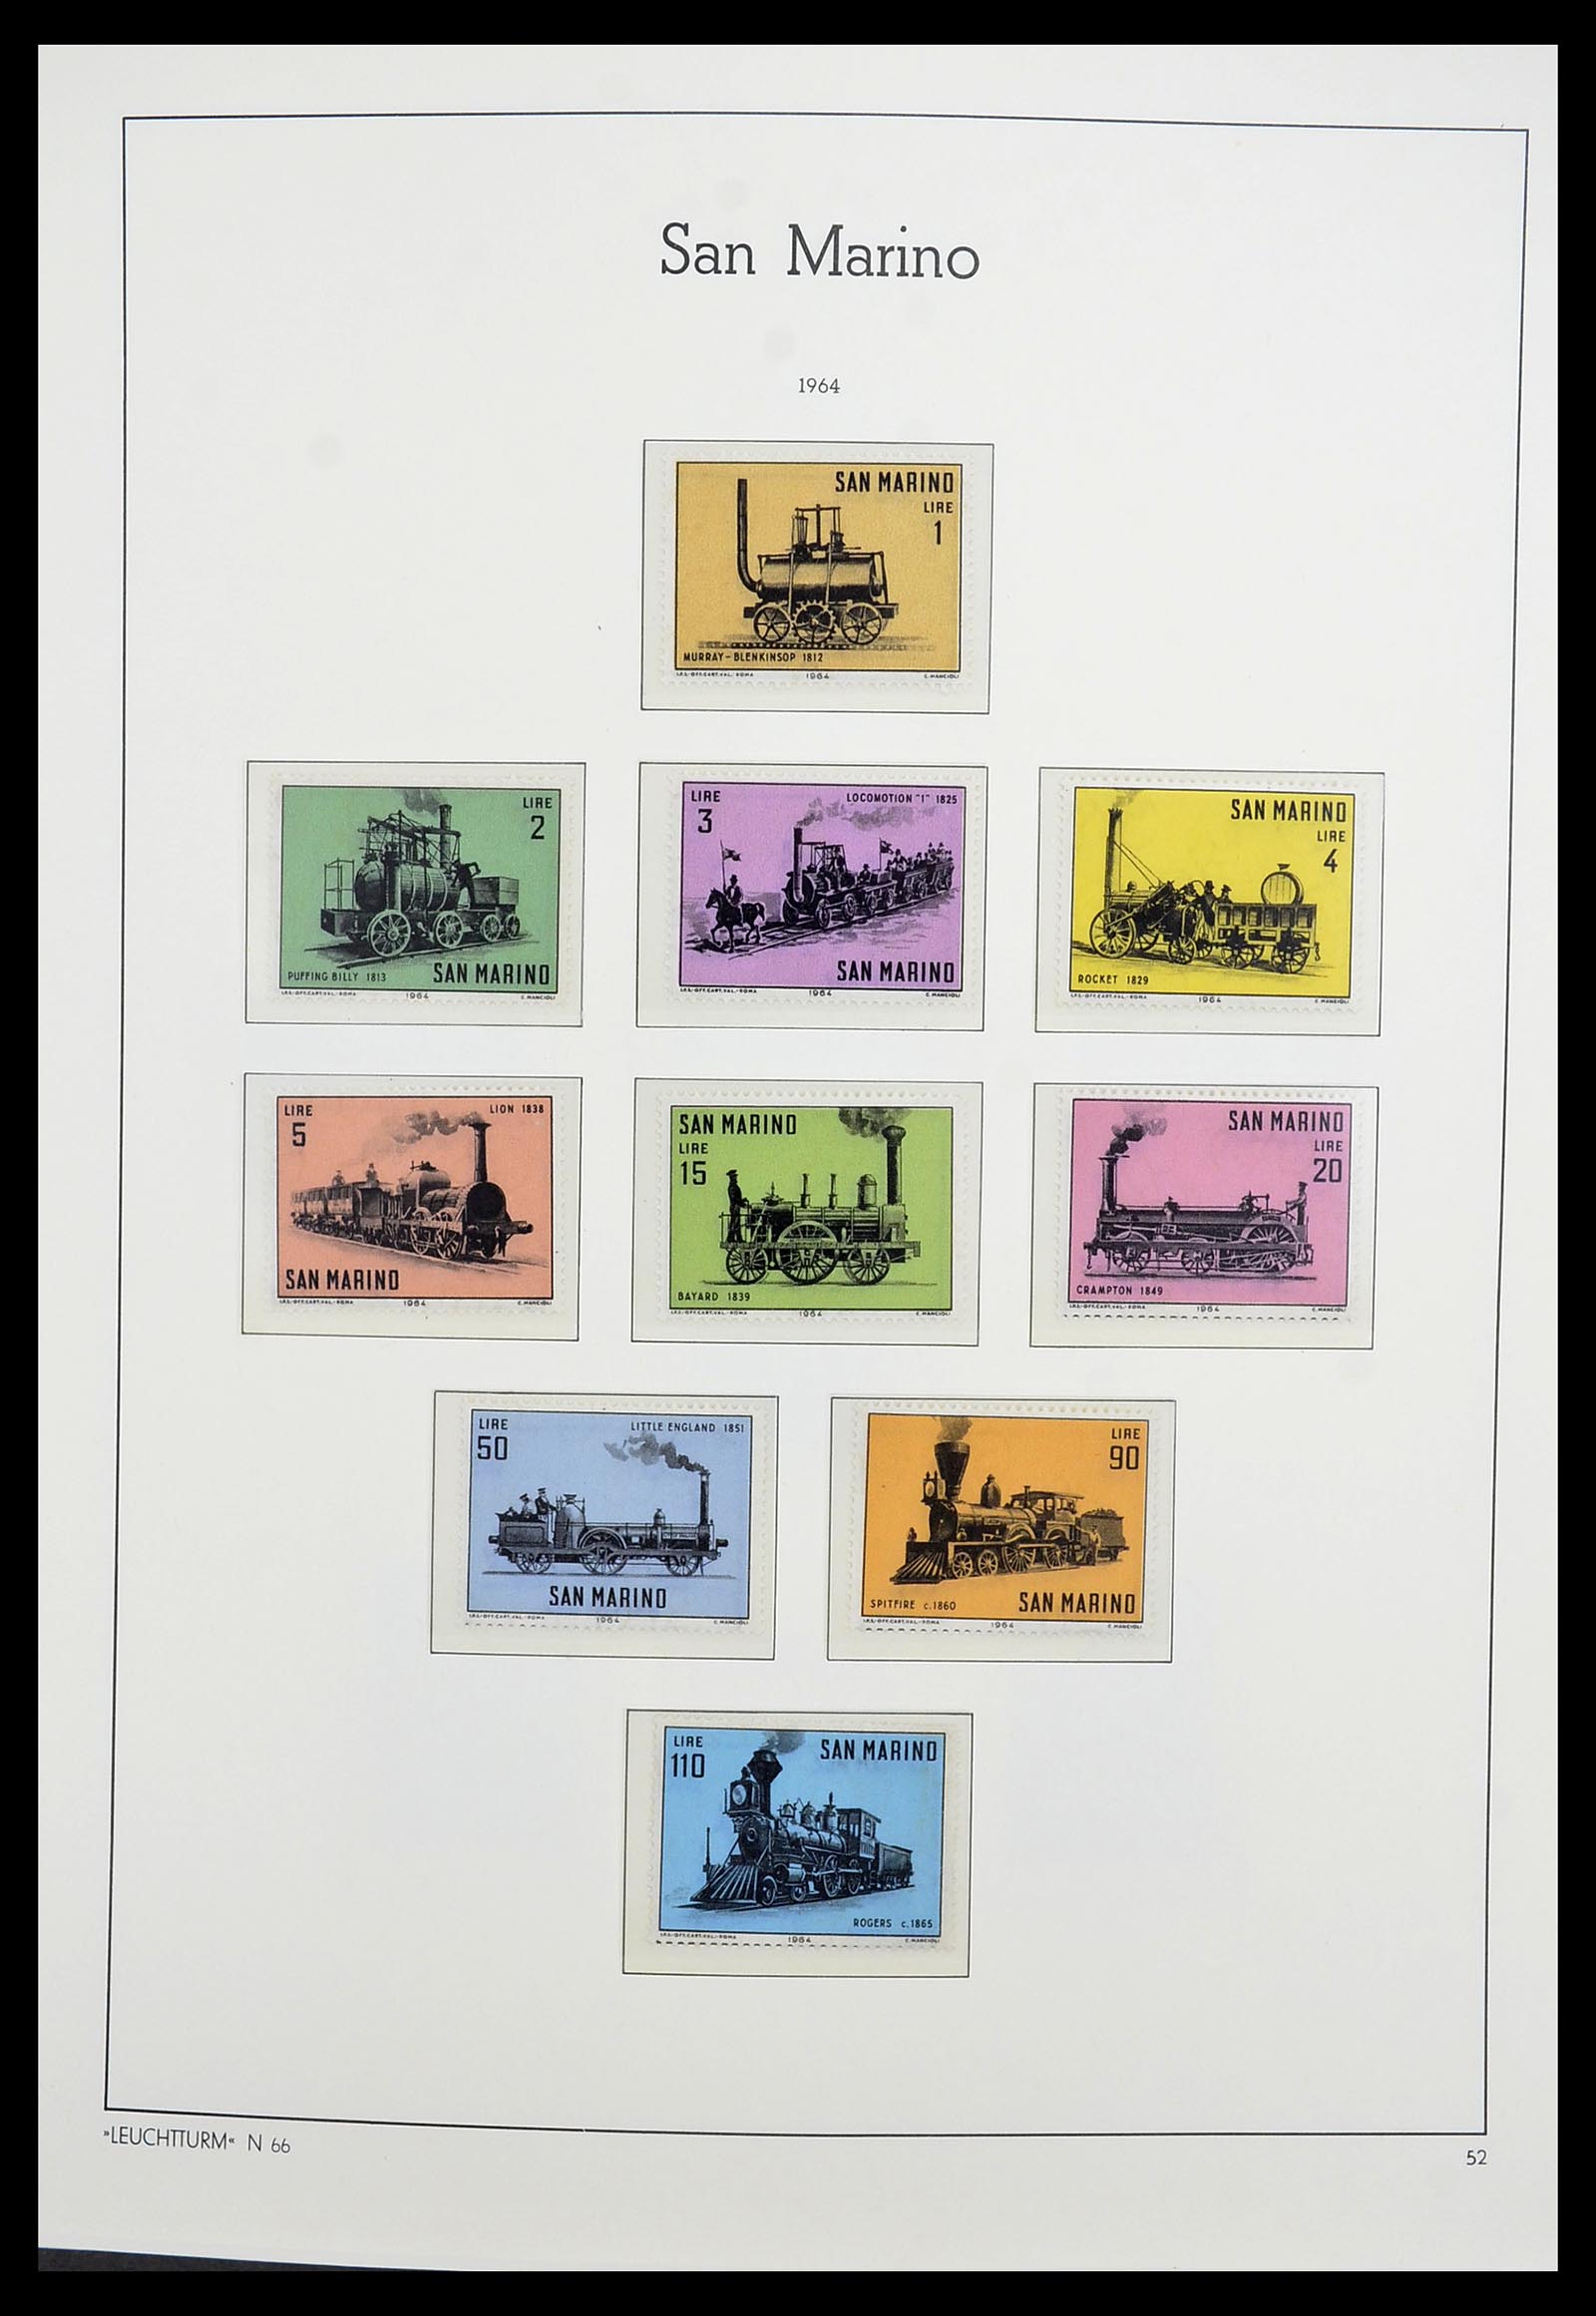 34243 096 - Stamp collection 34243 San Marino 1877-2008.